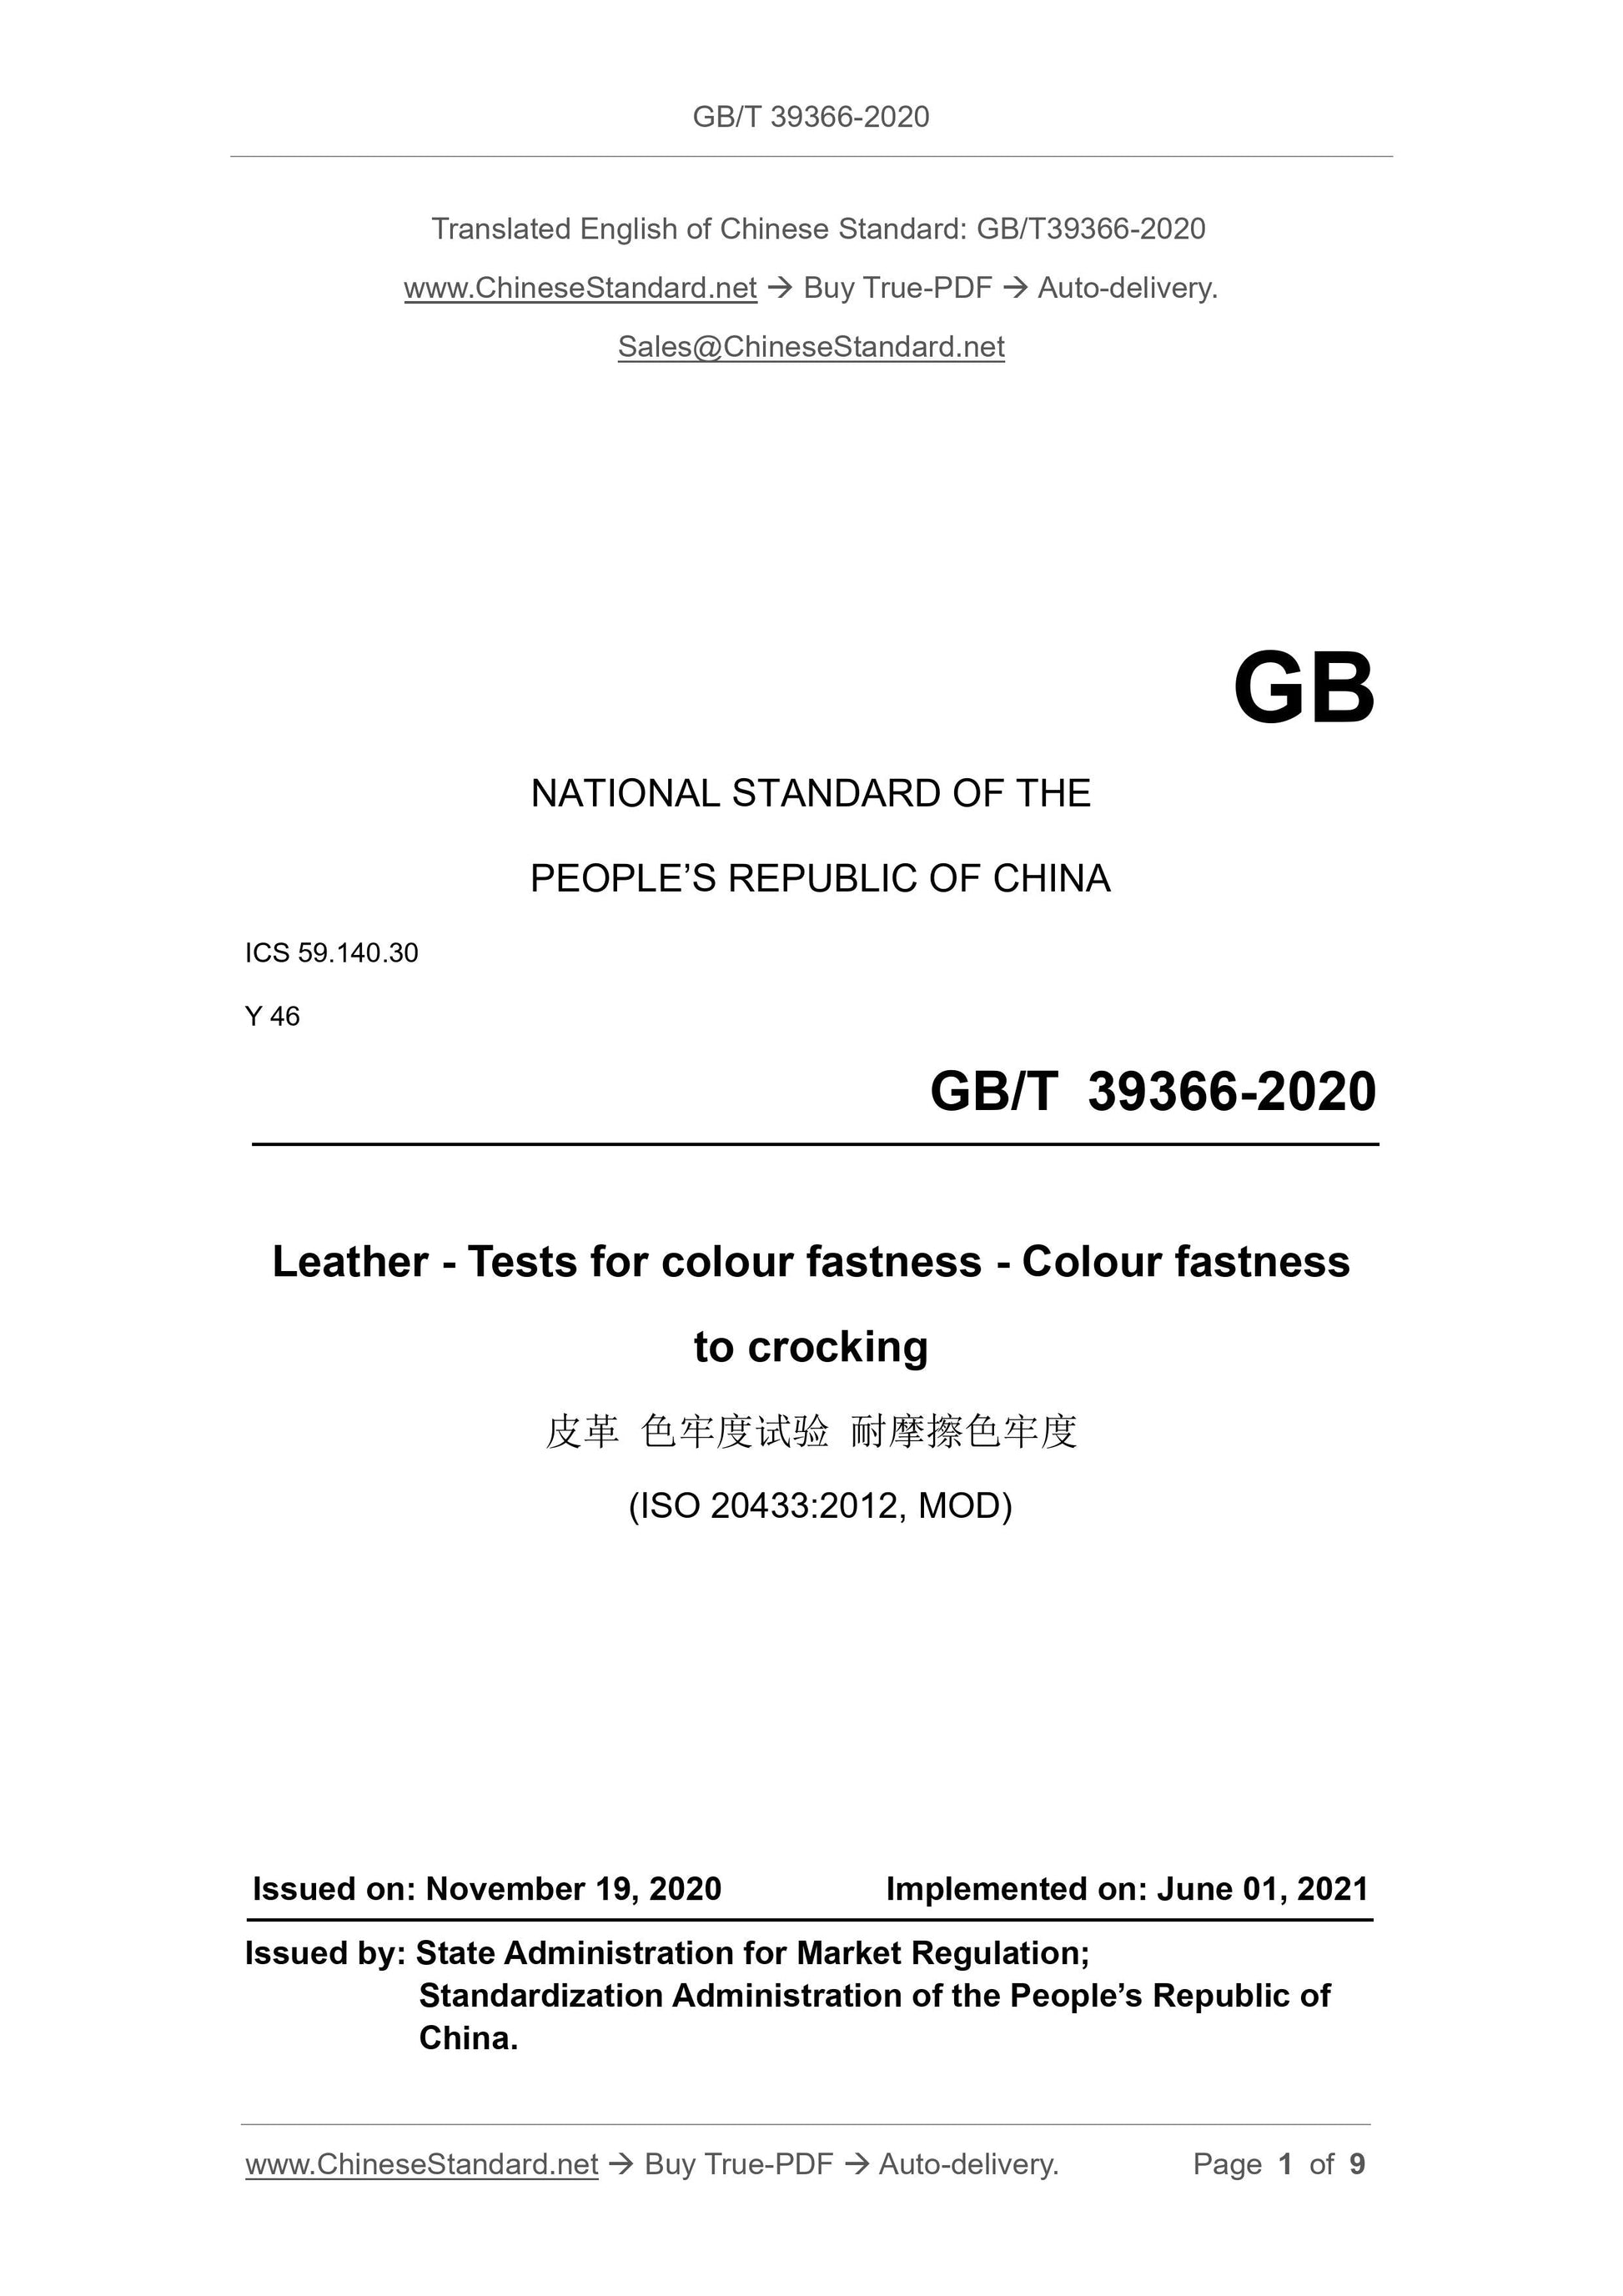 GBT39366-2020 Page 1